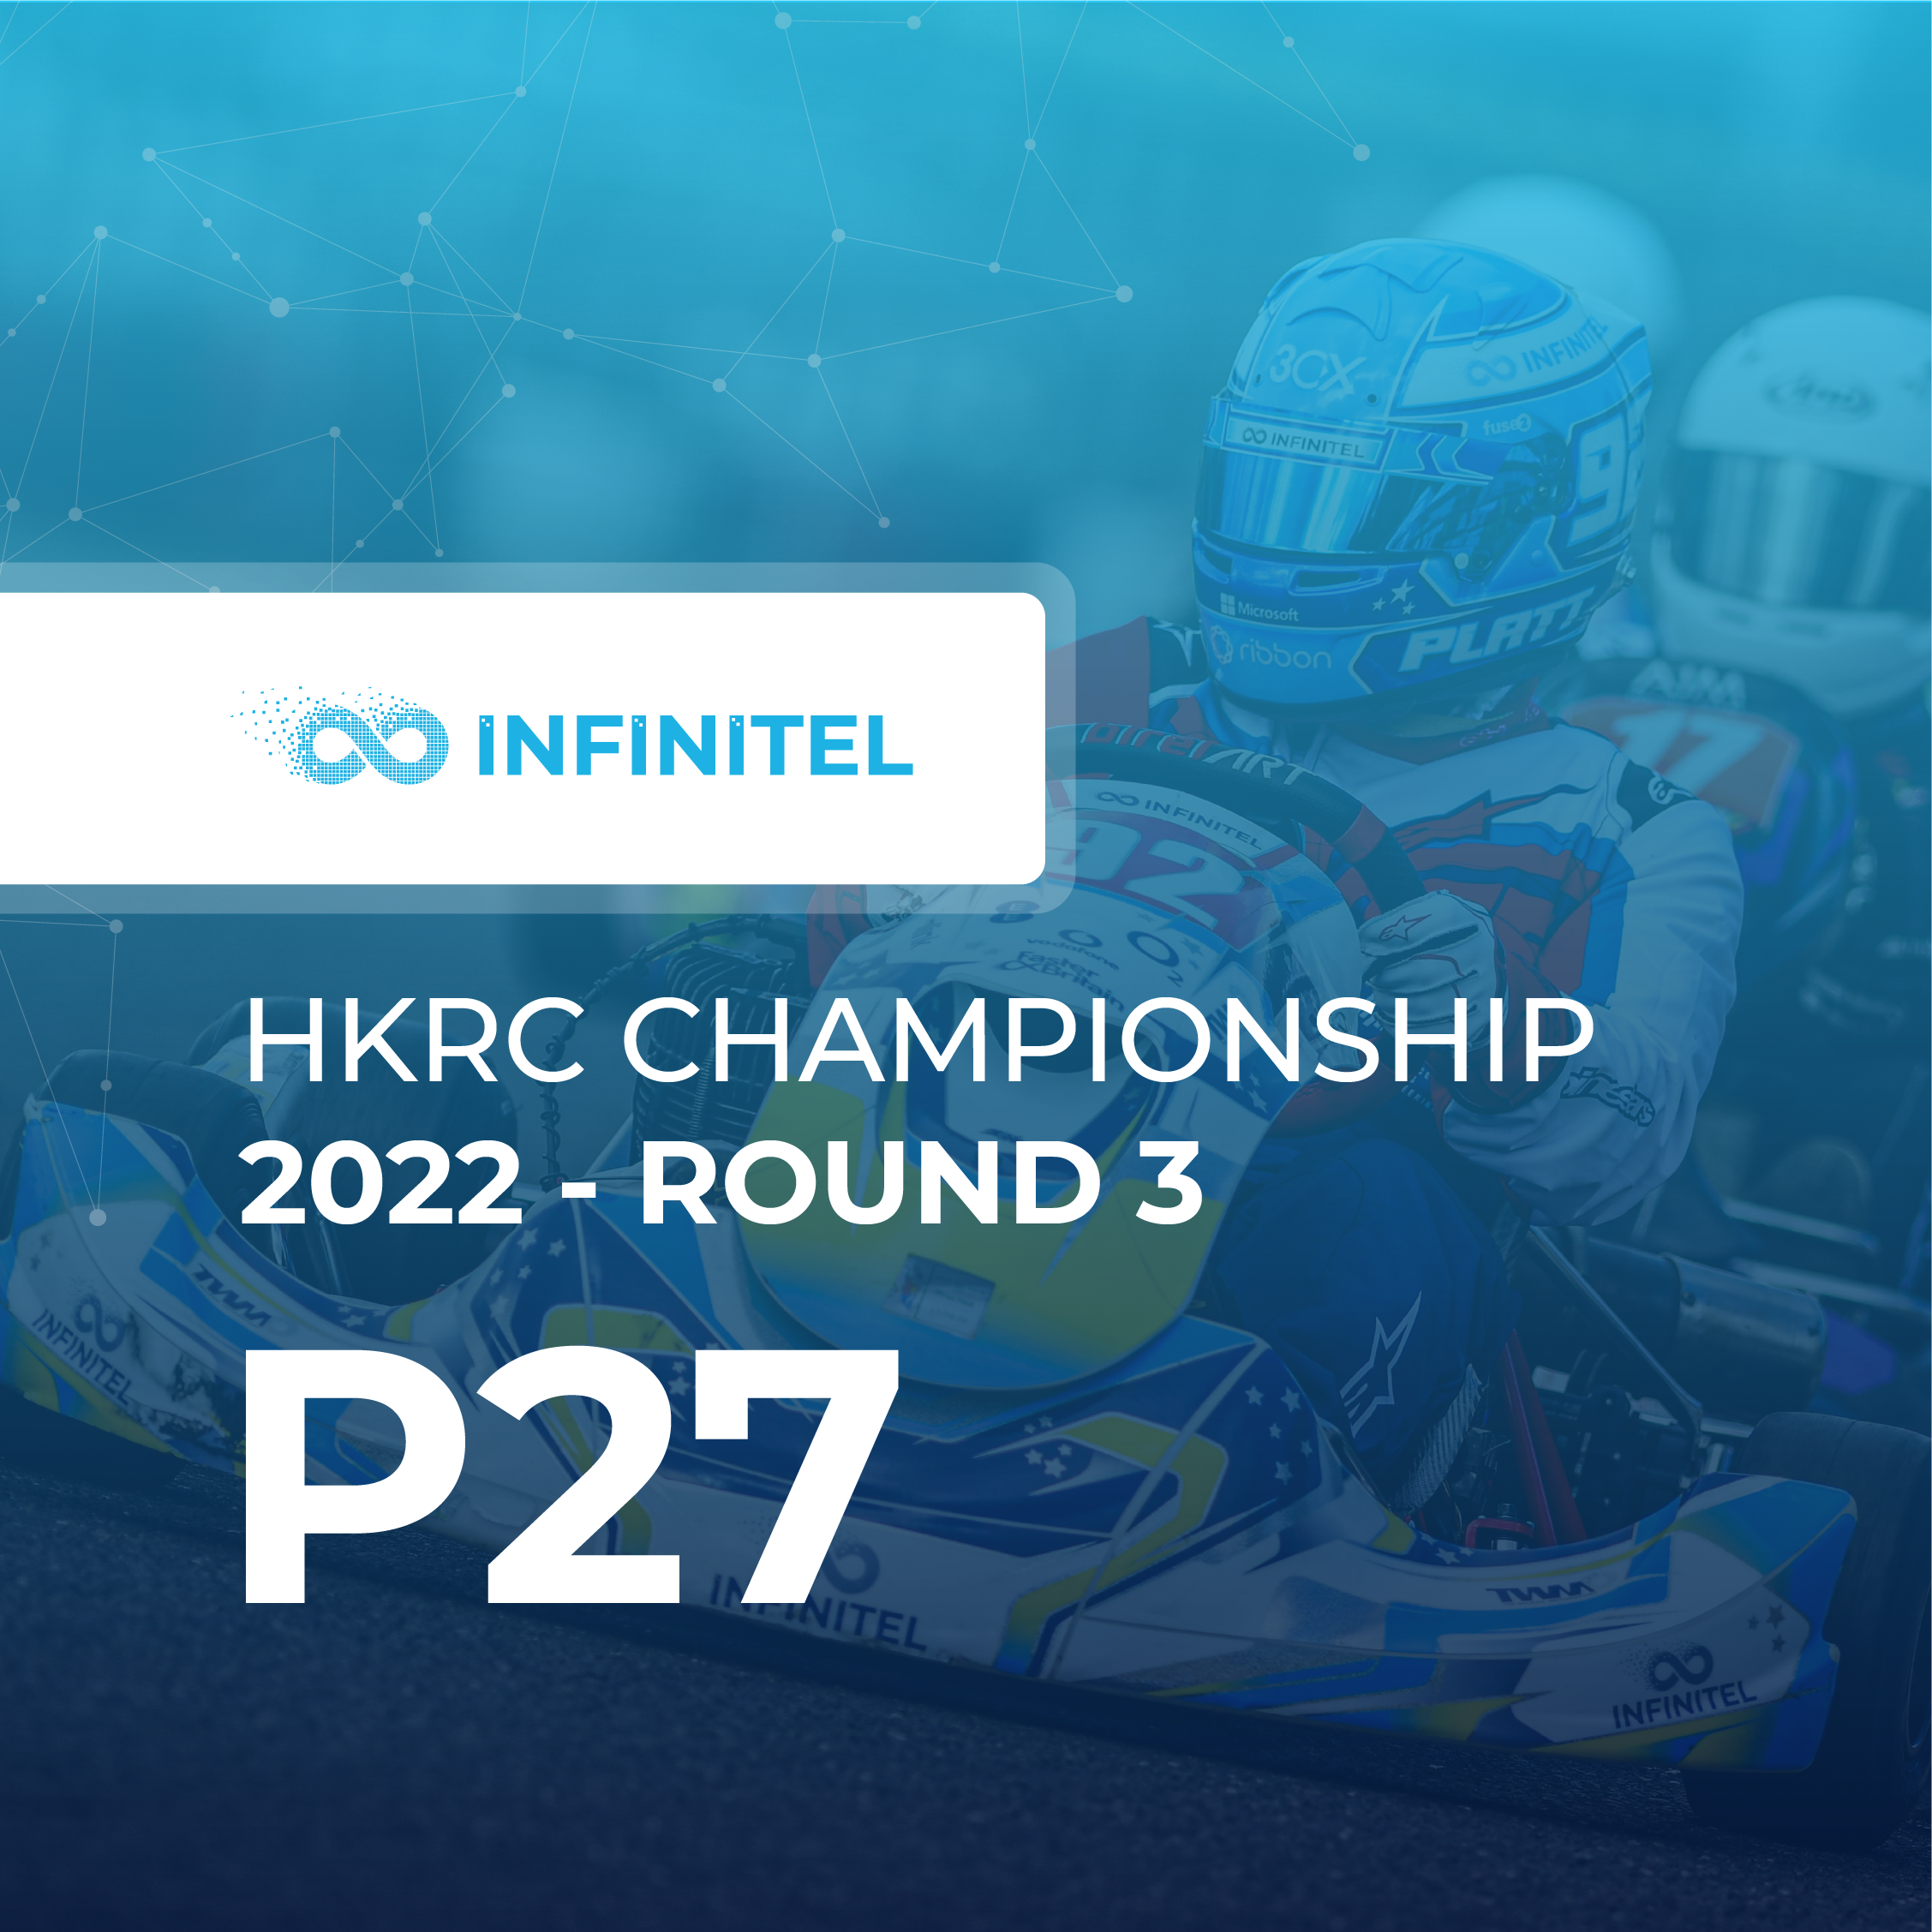 HKRC Championship 2022 – Round 3